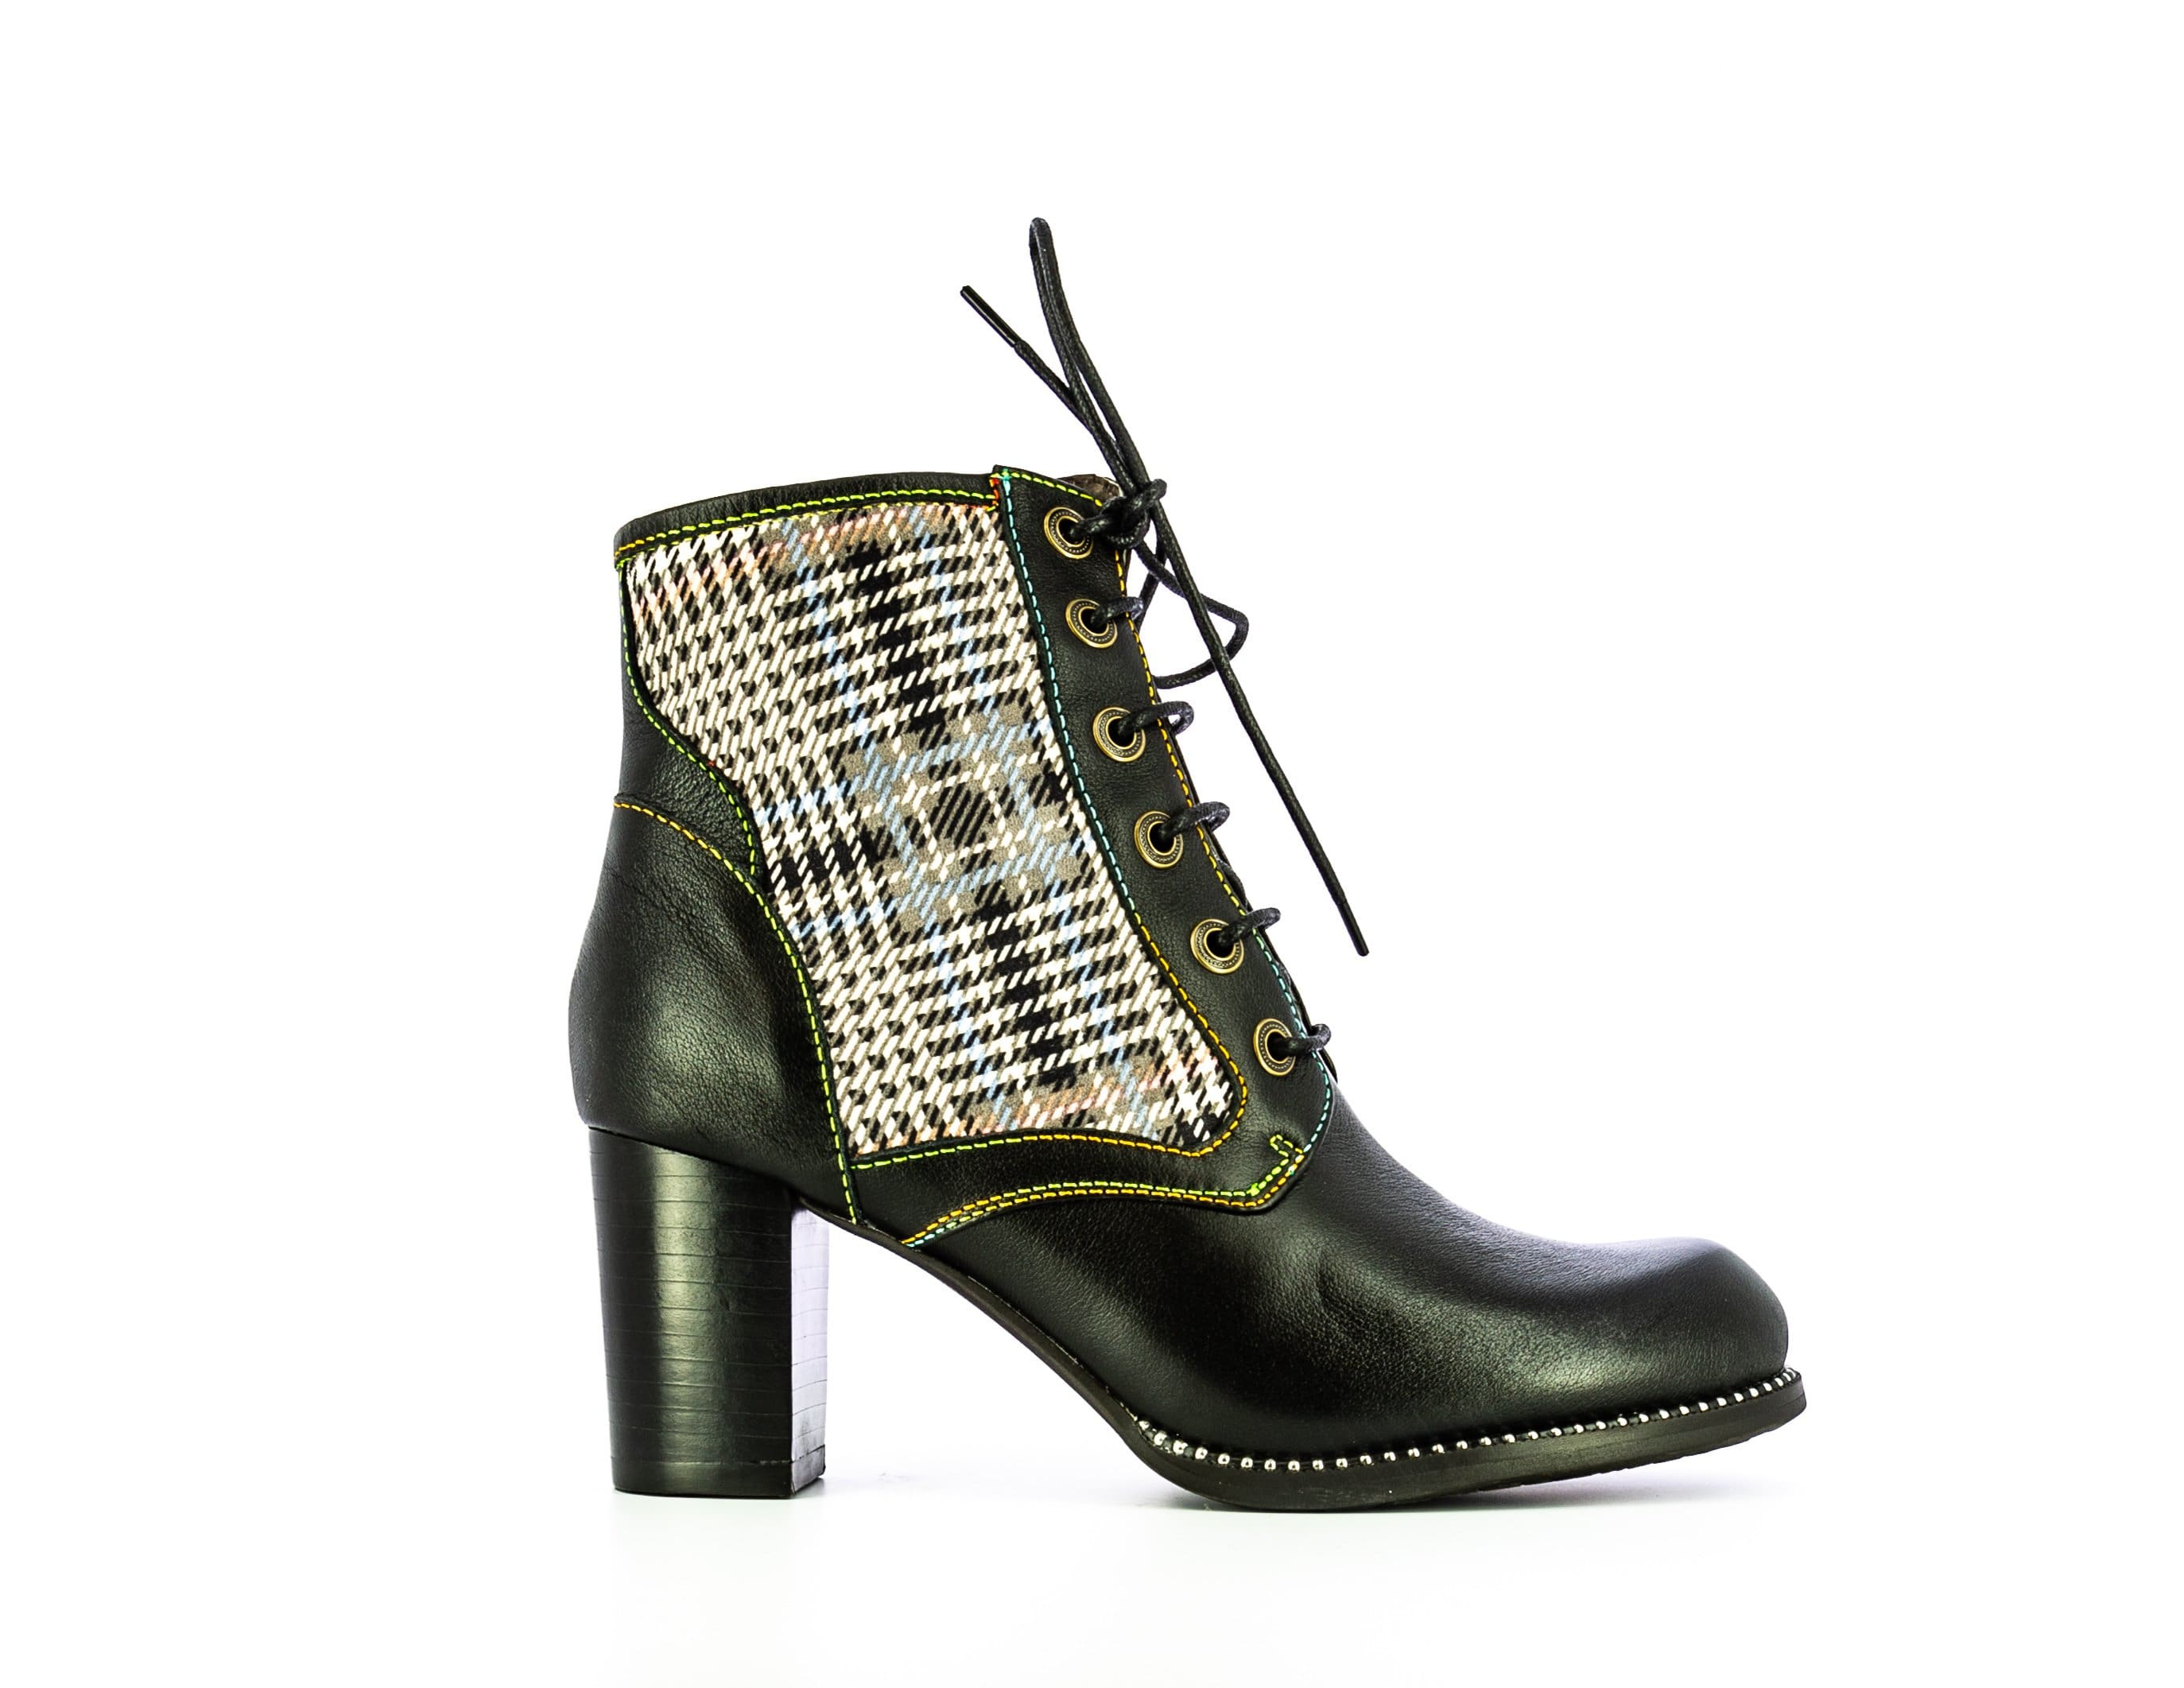 Chaussure ANCNAO 22 - 35 / Noir - Boots